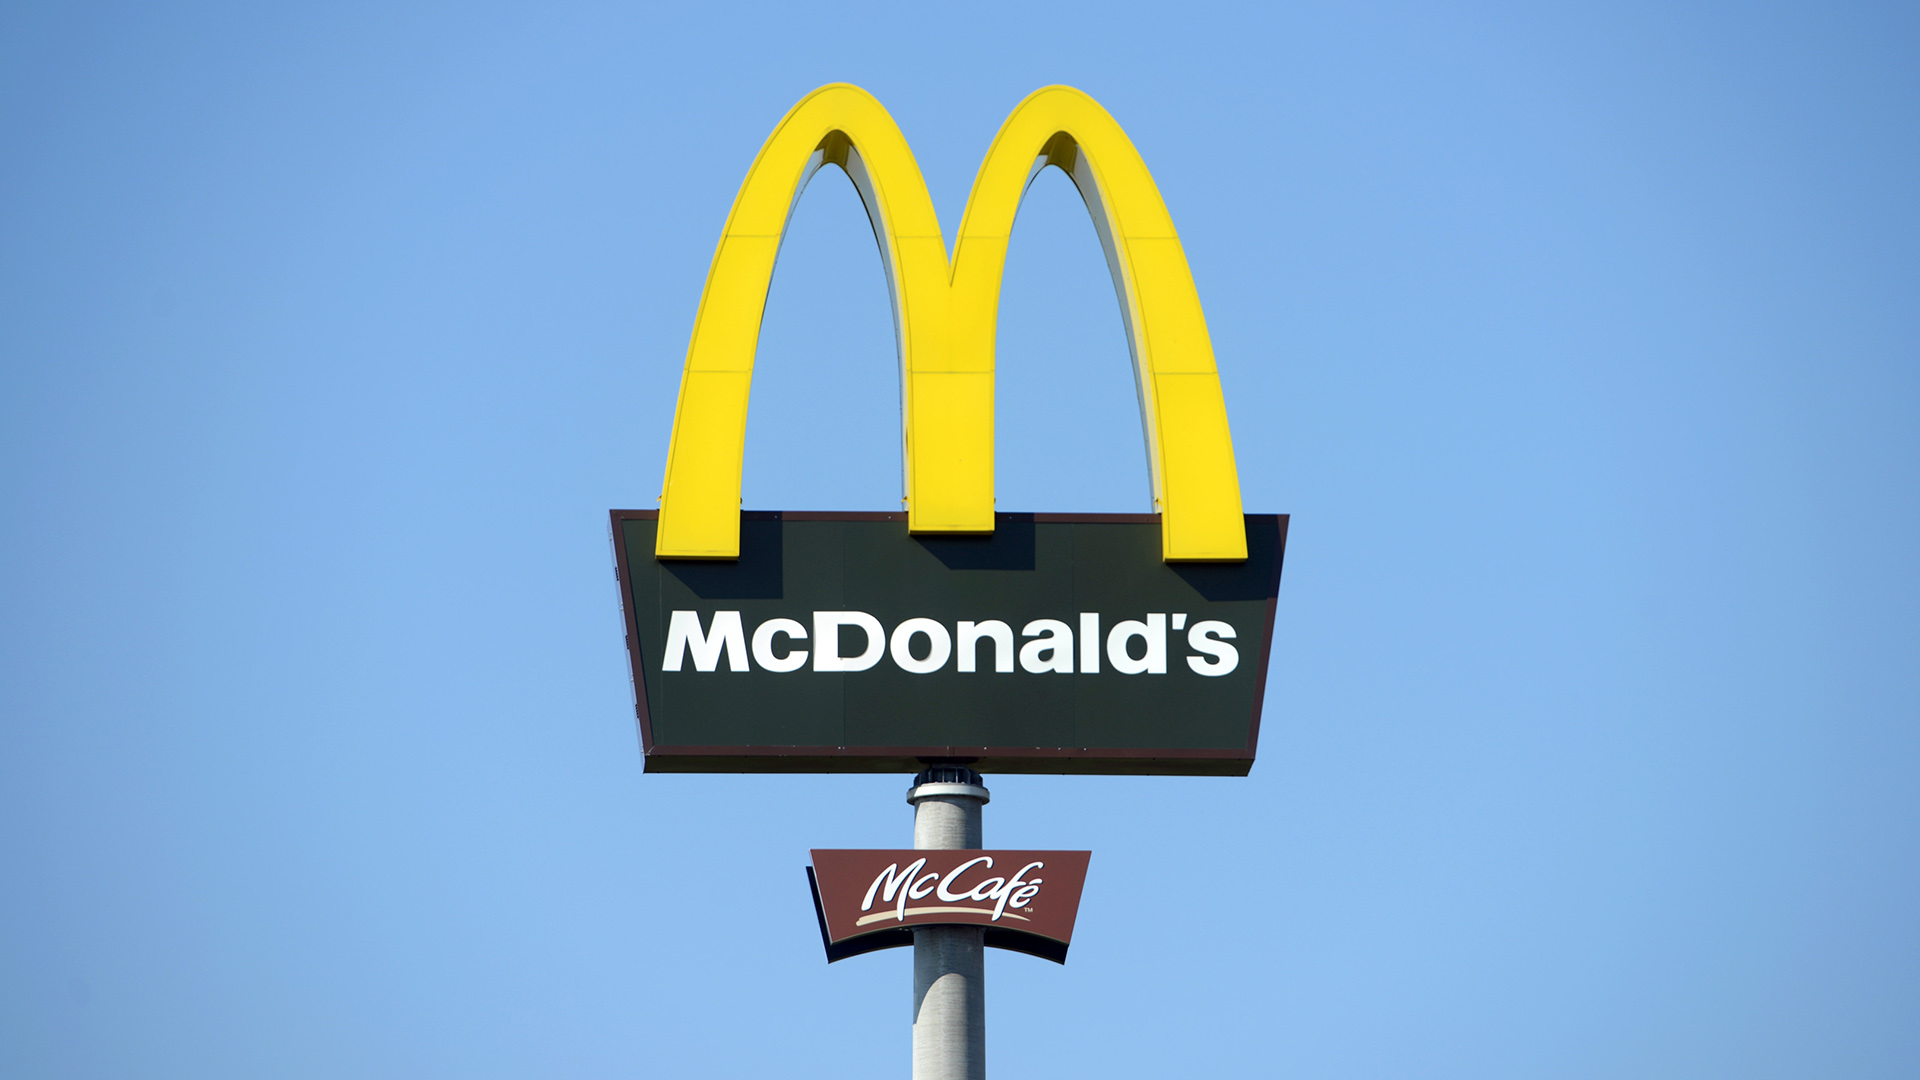 Das Logo der Fastfood-Kette McDonald's